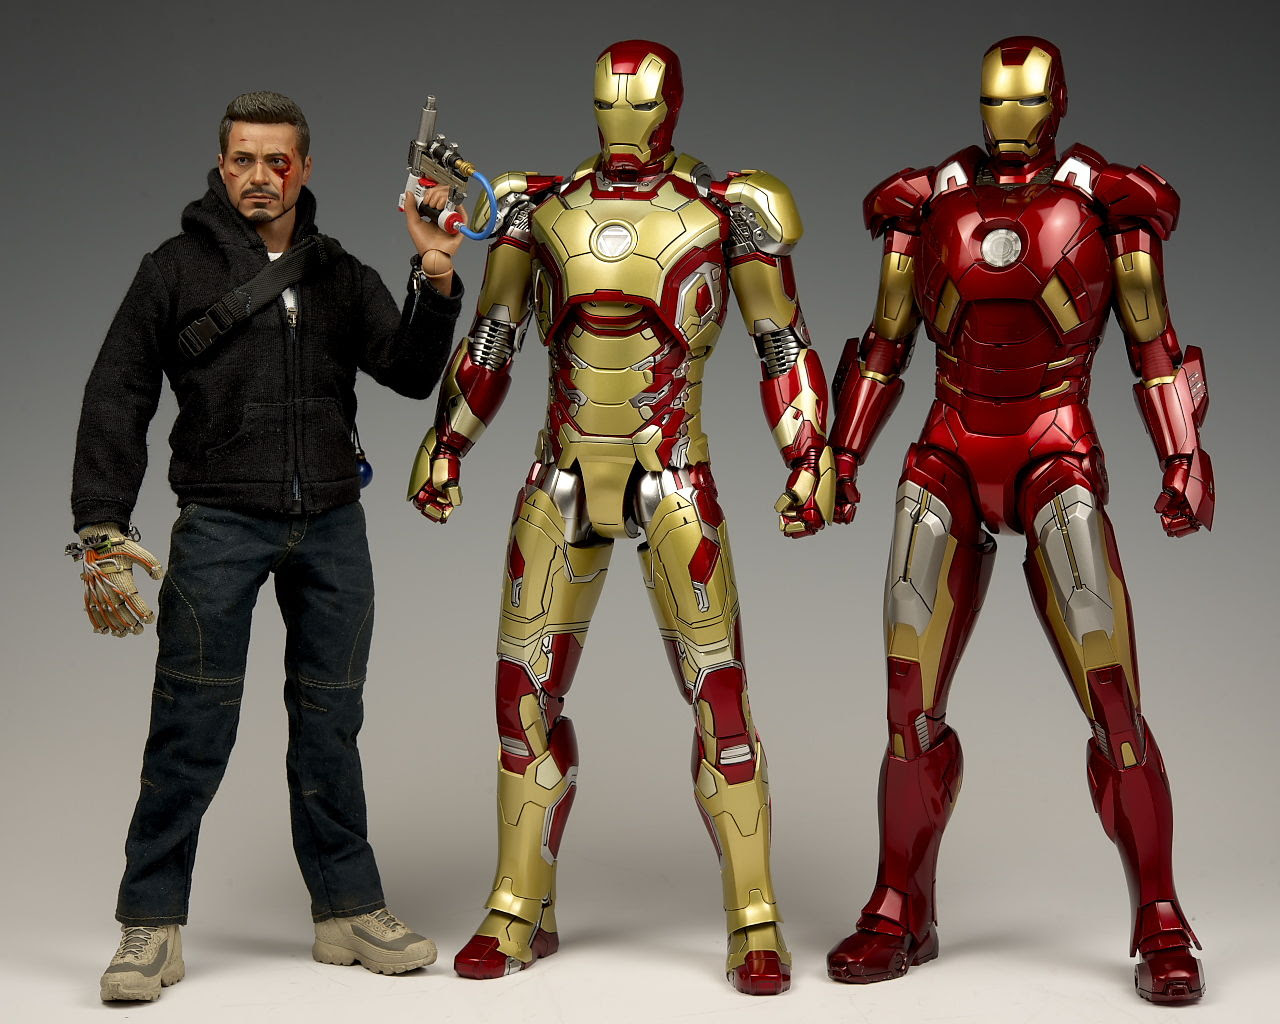 Hot Toys Mms Diecast Series 1 6 Iron Man 3 Mark Xlii Full Photoreview No 52 Hi Res Images Full Eng Info Gunjap